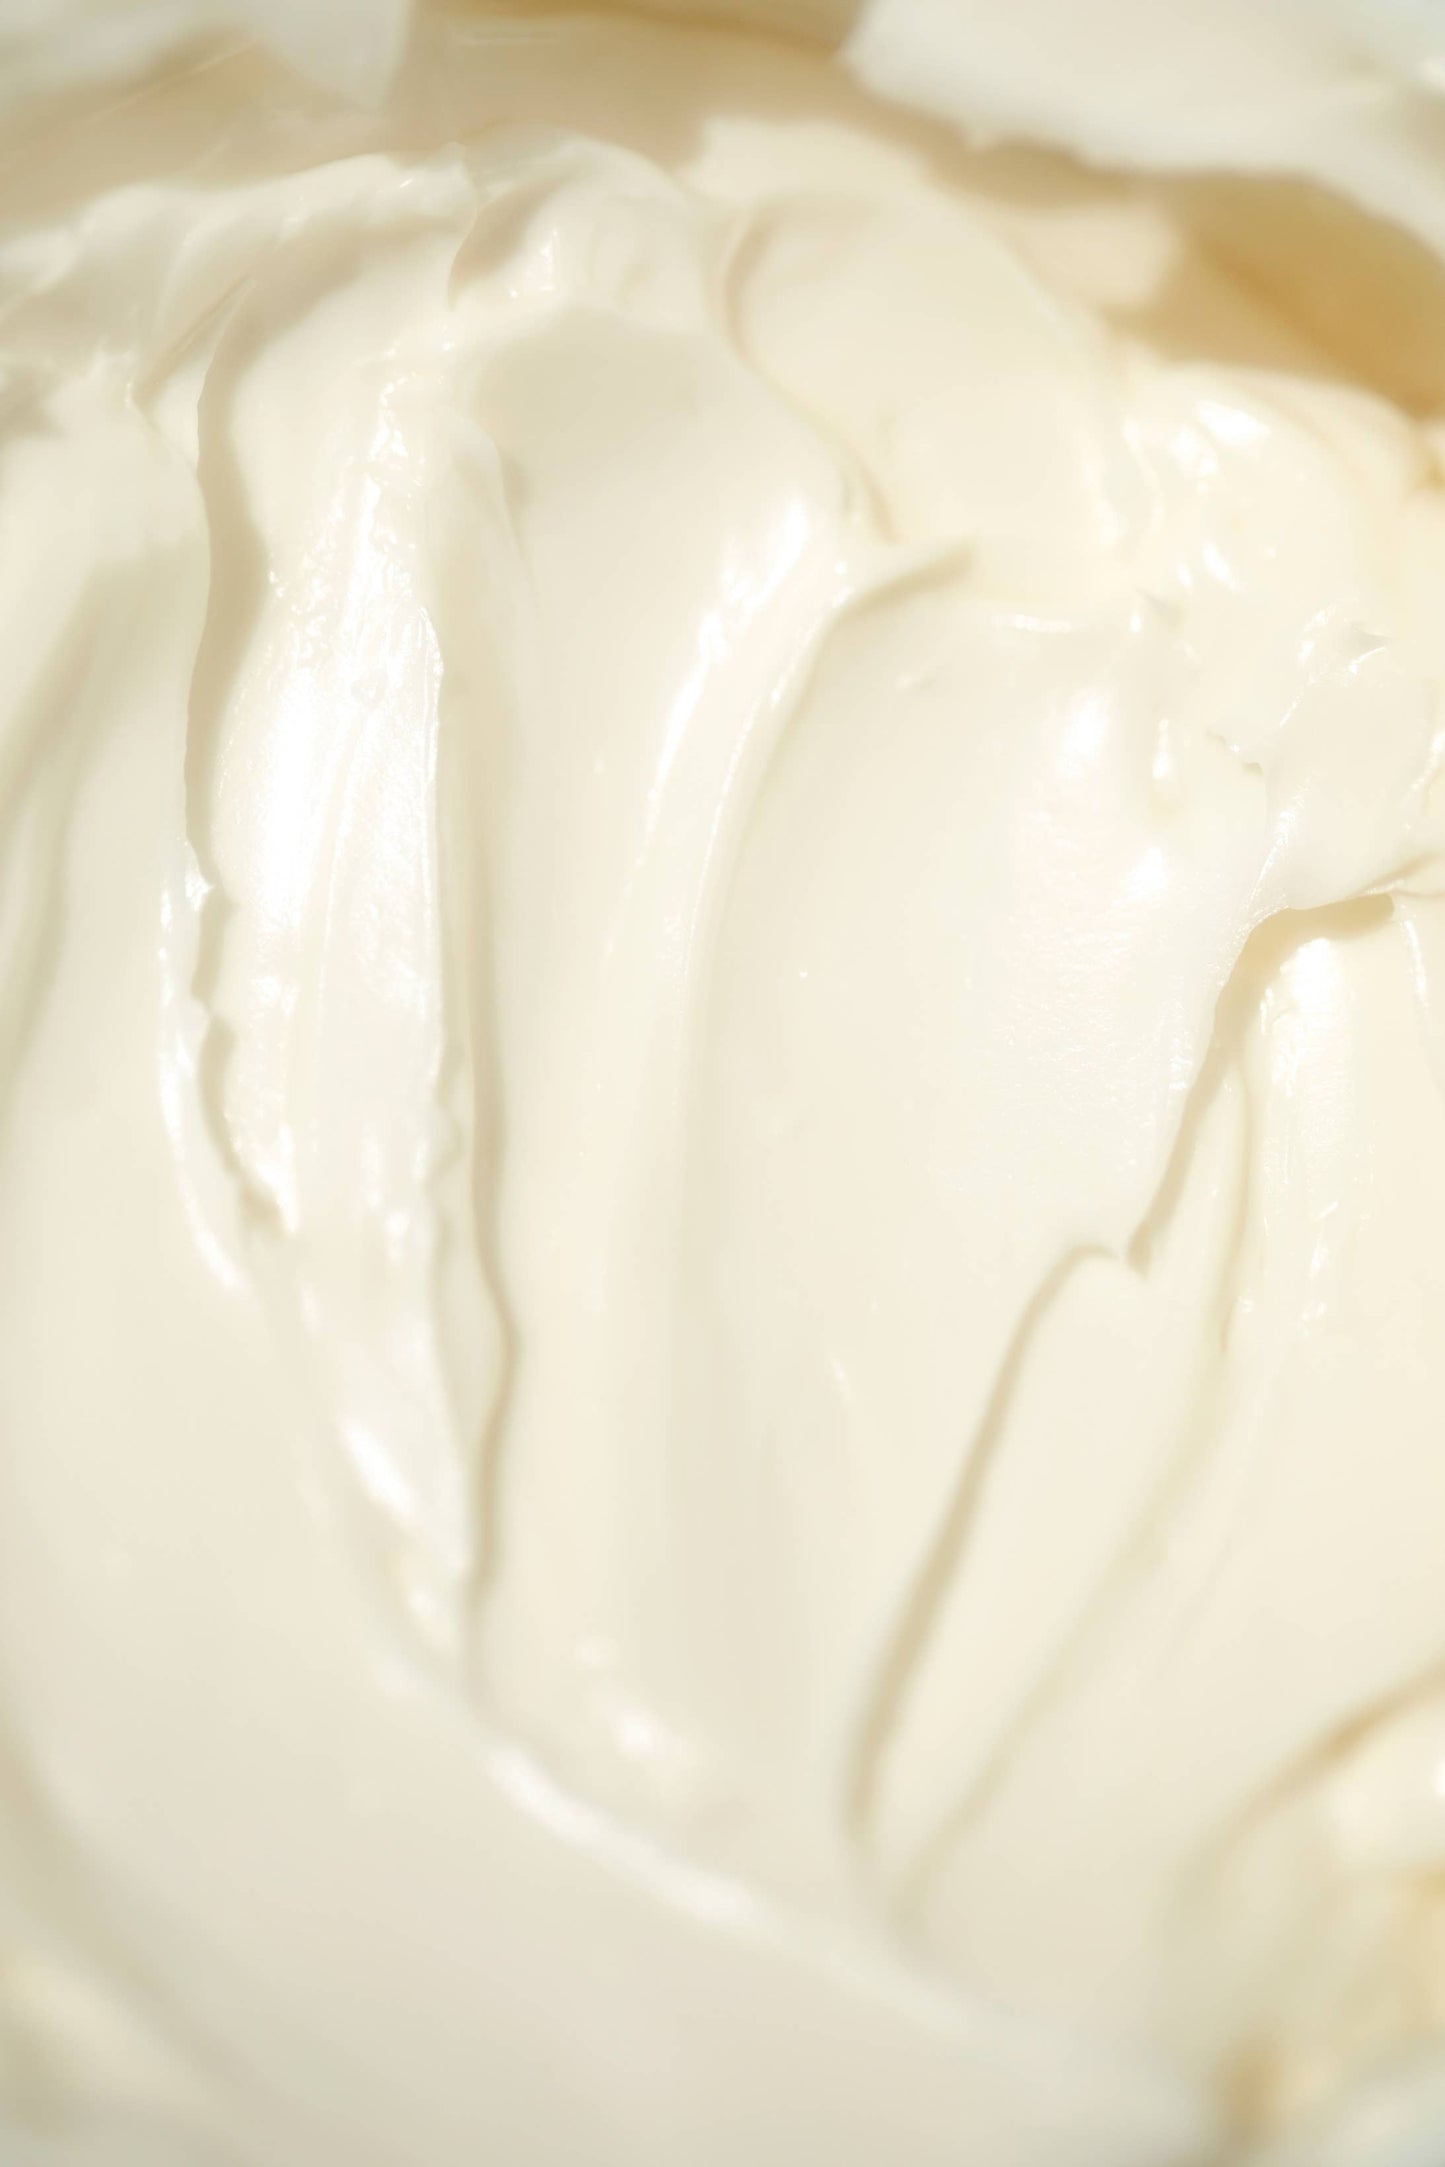 BUTTERFUL Marula Luxe Body Butter (CITRUS) High Moisturizing